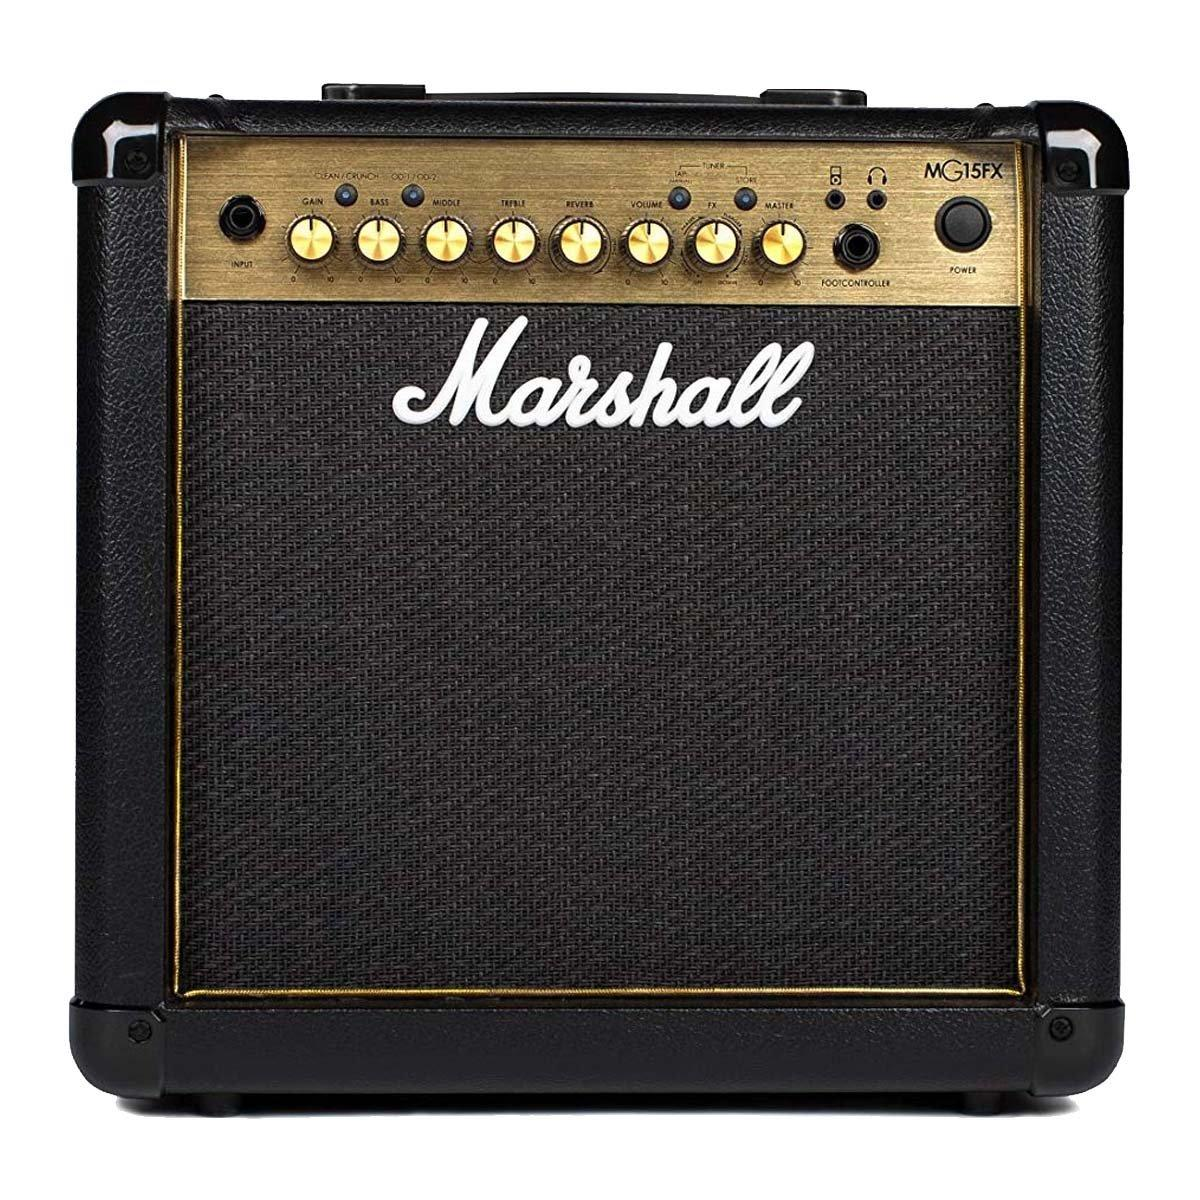 Amplificador MARSHALL Para Guitarra Eléctrica de 15W. Modelo